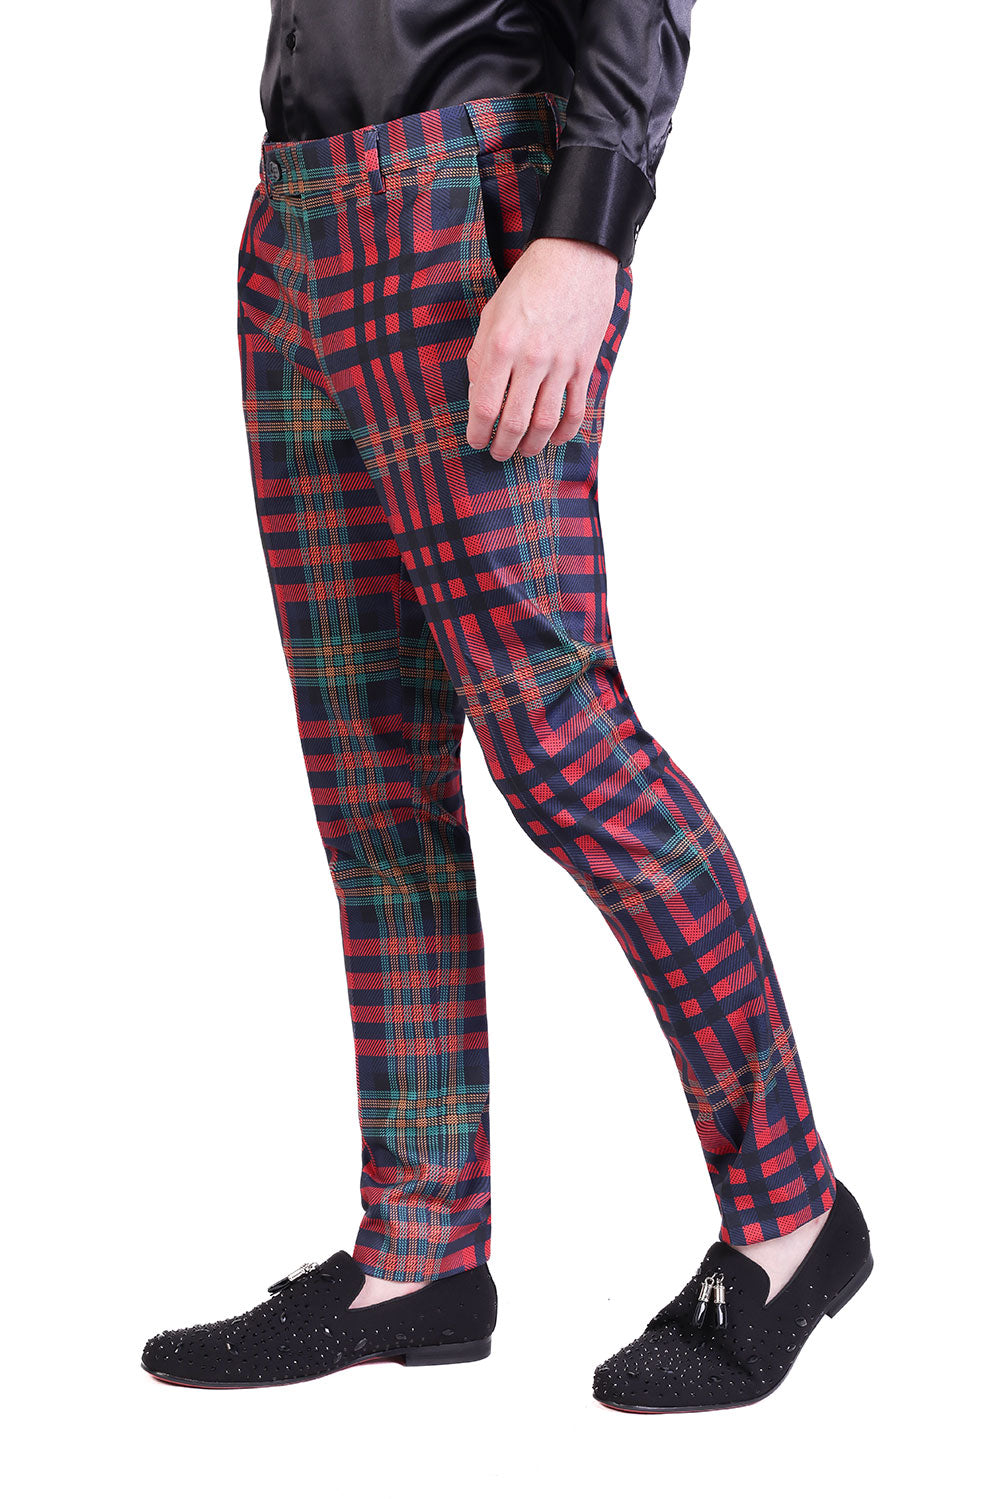 Barabas Men's Luxury Plaid Checkered Chino Dress Slim Pants CP201 Tiger